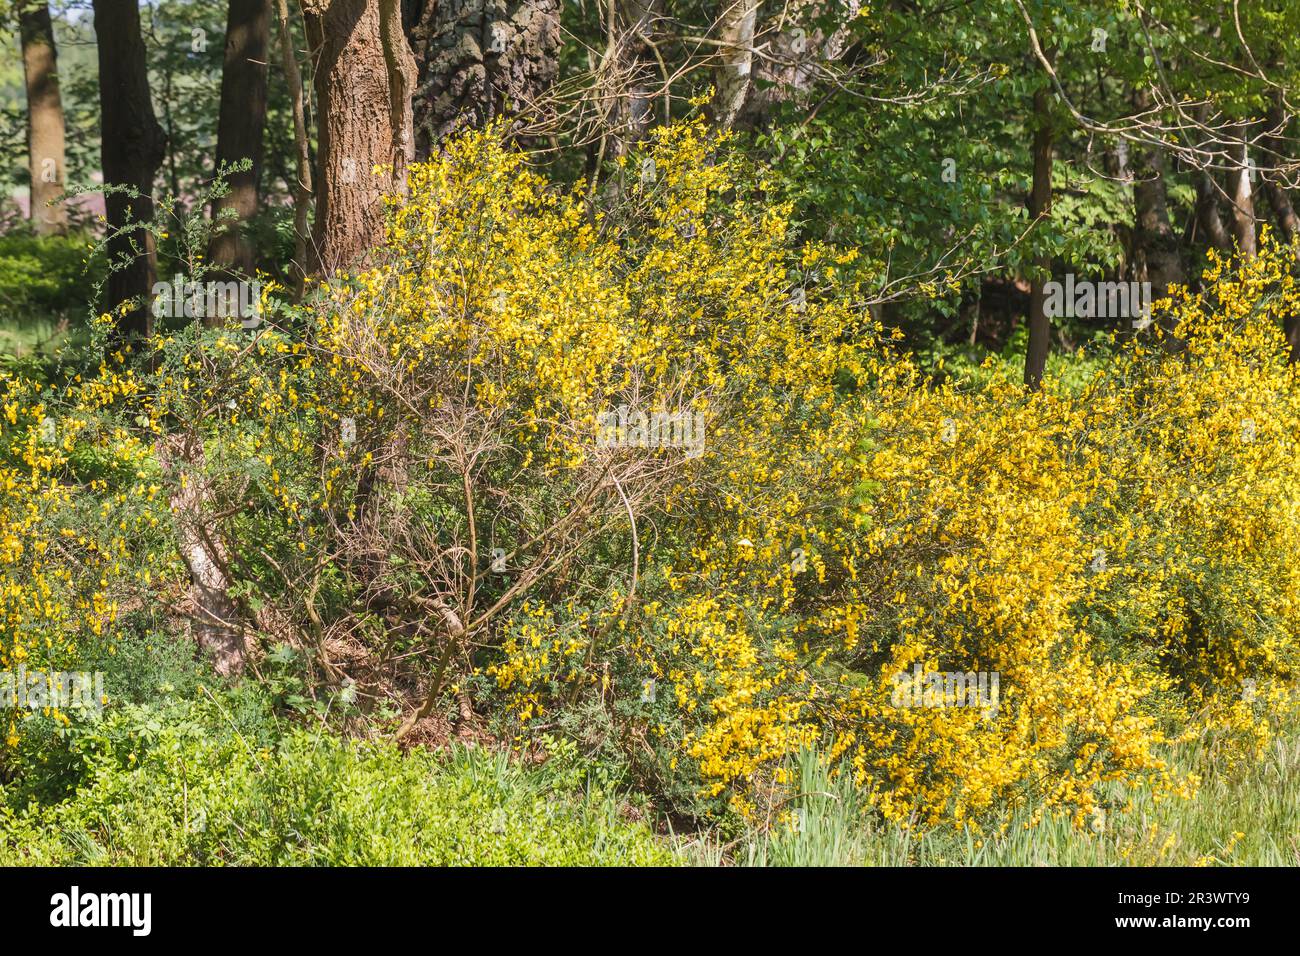 Cytisus scovarius buisson au printemps, connu sous le nom de balai commun,  balai Scotch, balai anglais Photo Stock - Alamy